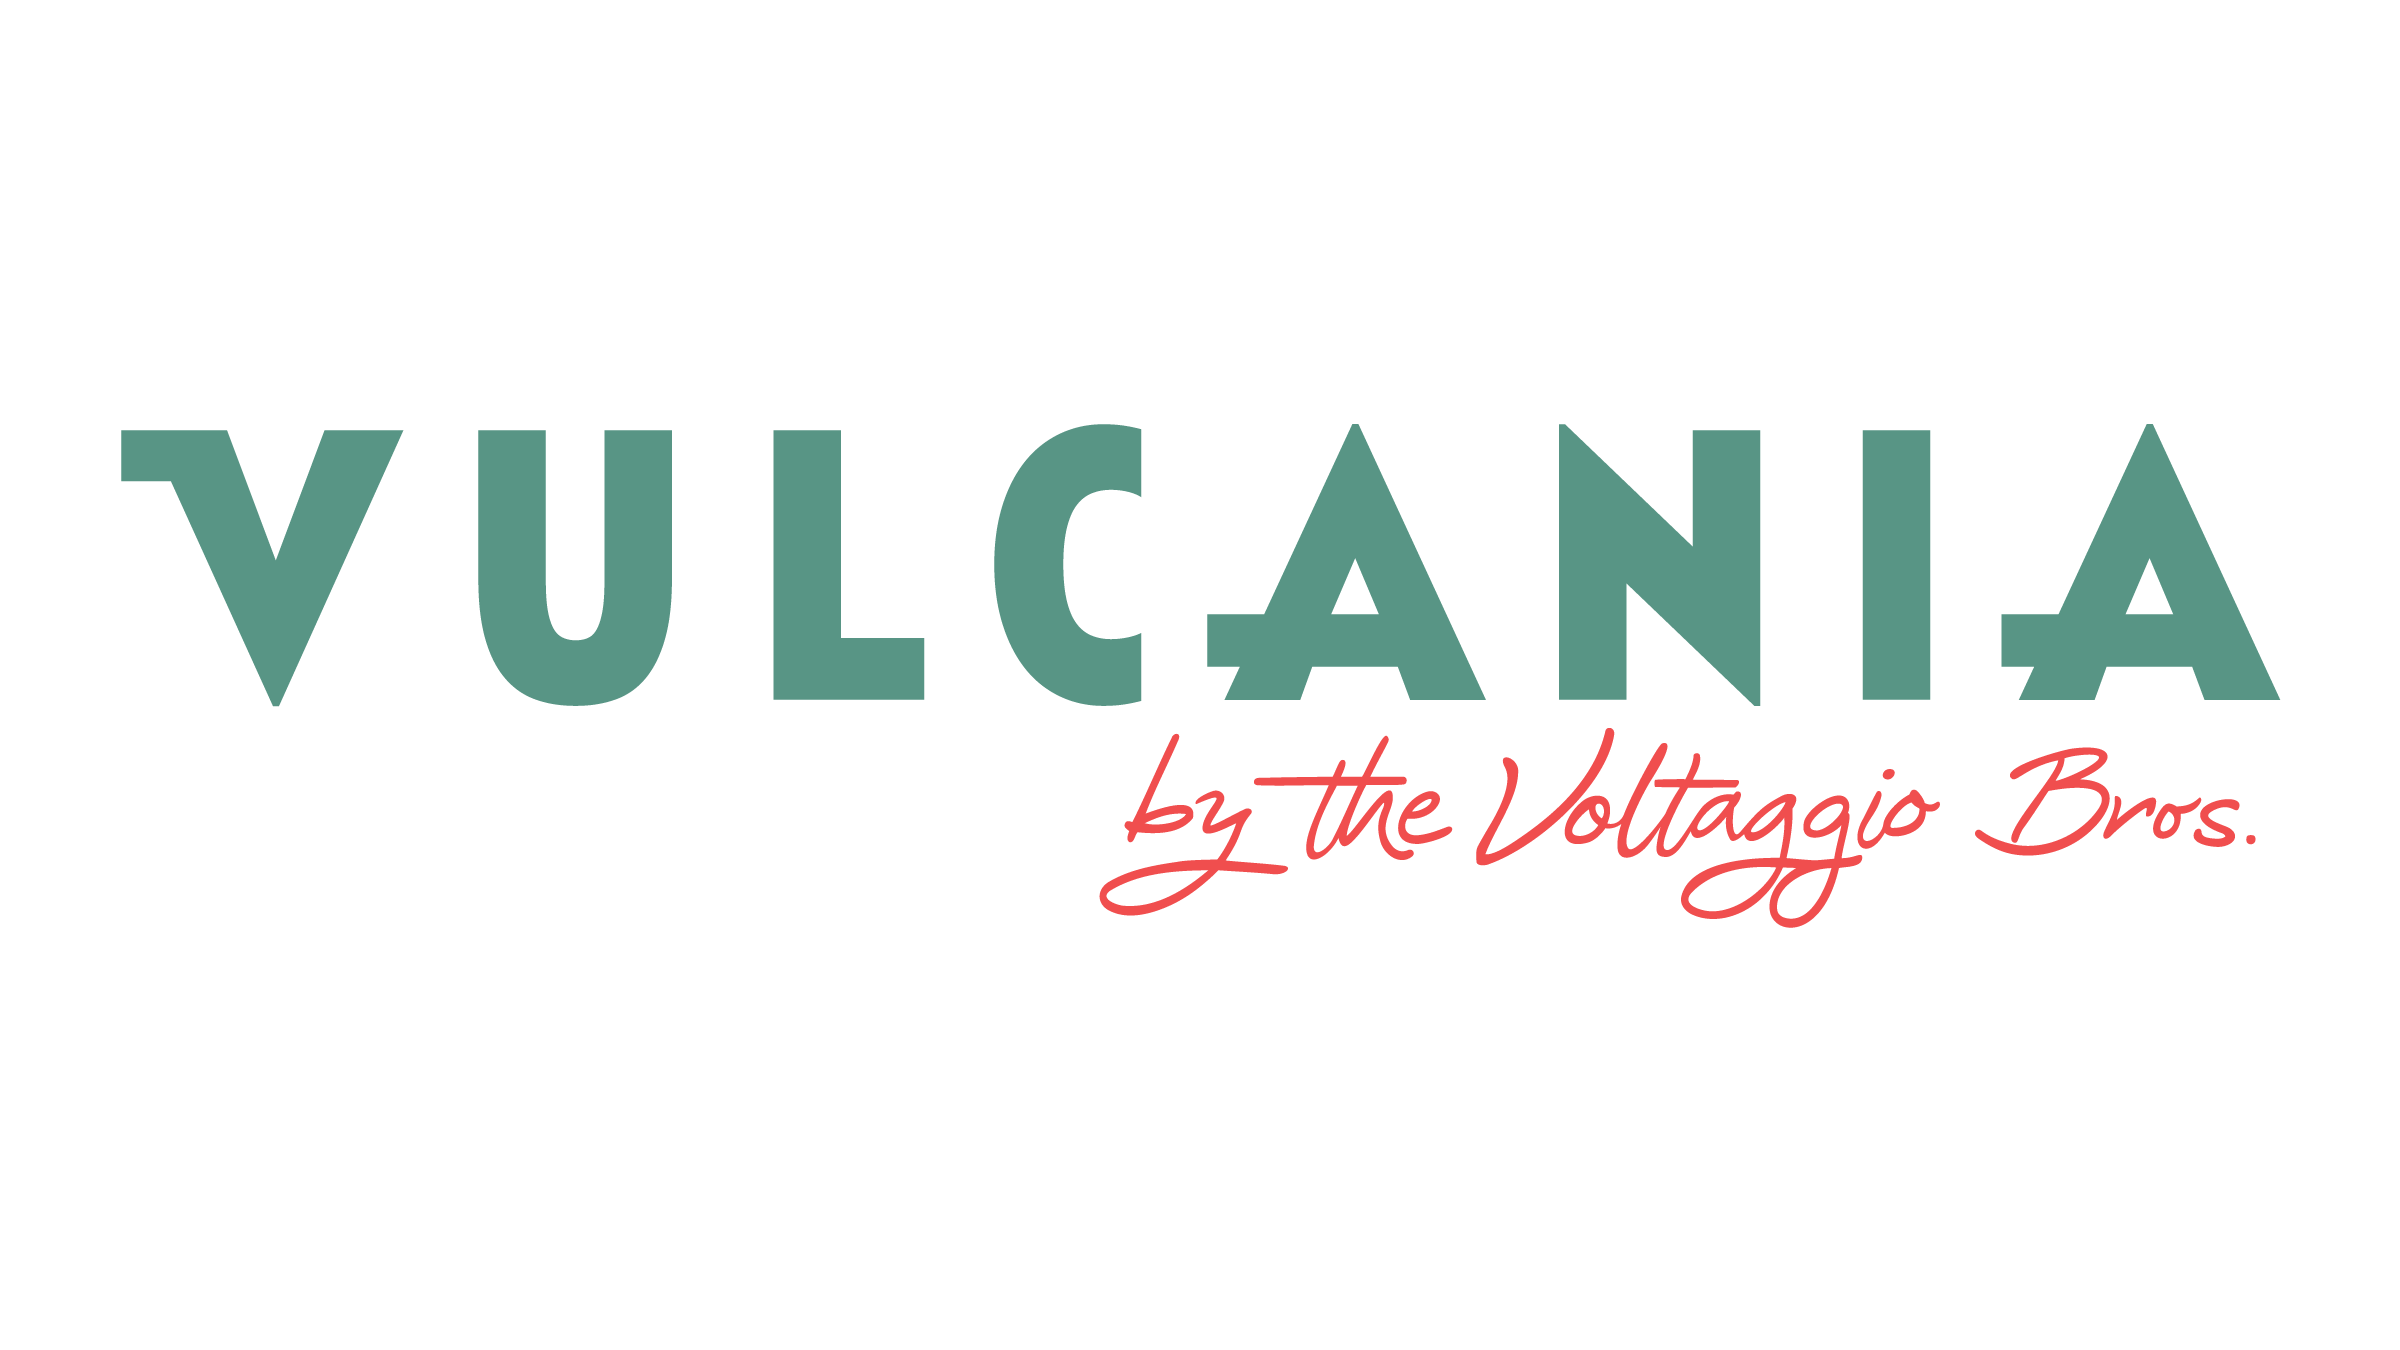 Vulcania by the Voltaggio Bros Logo